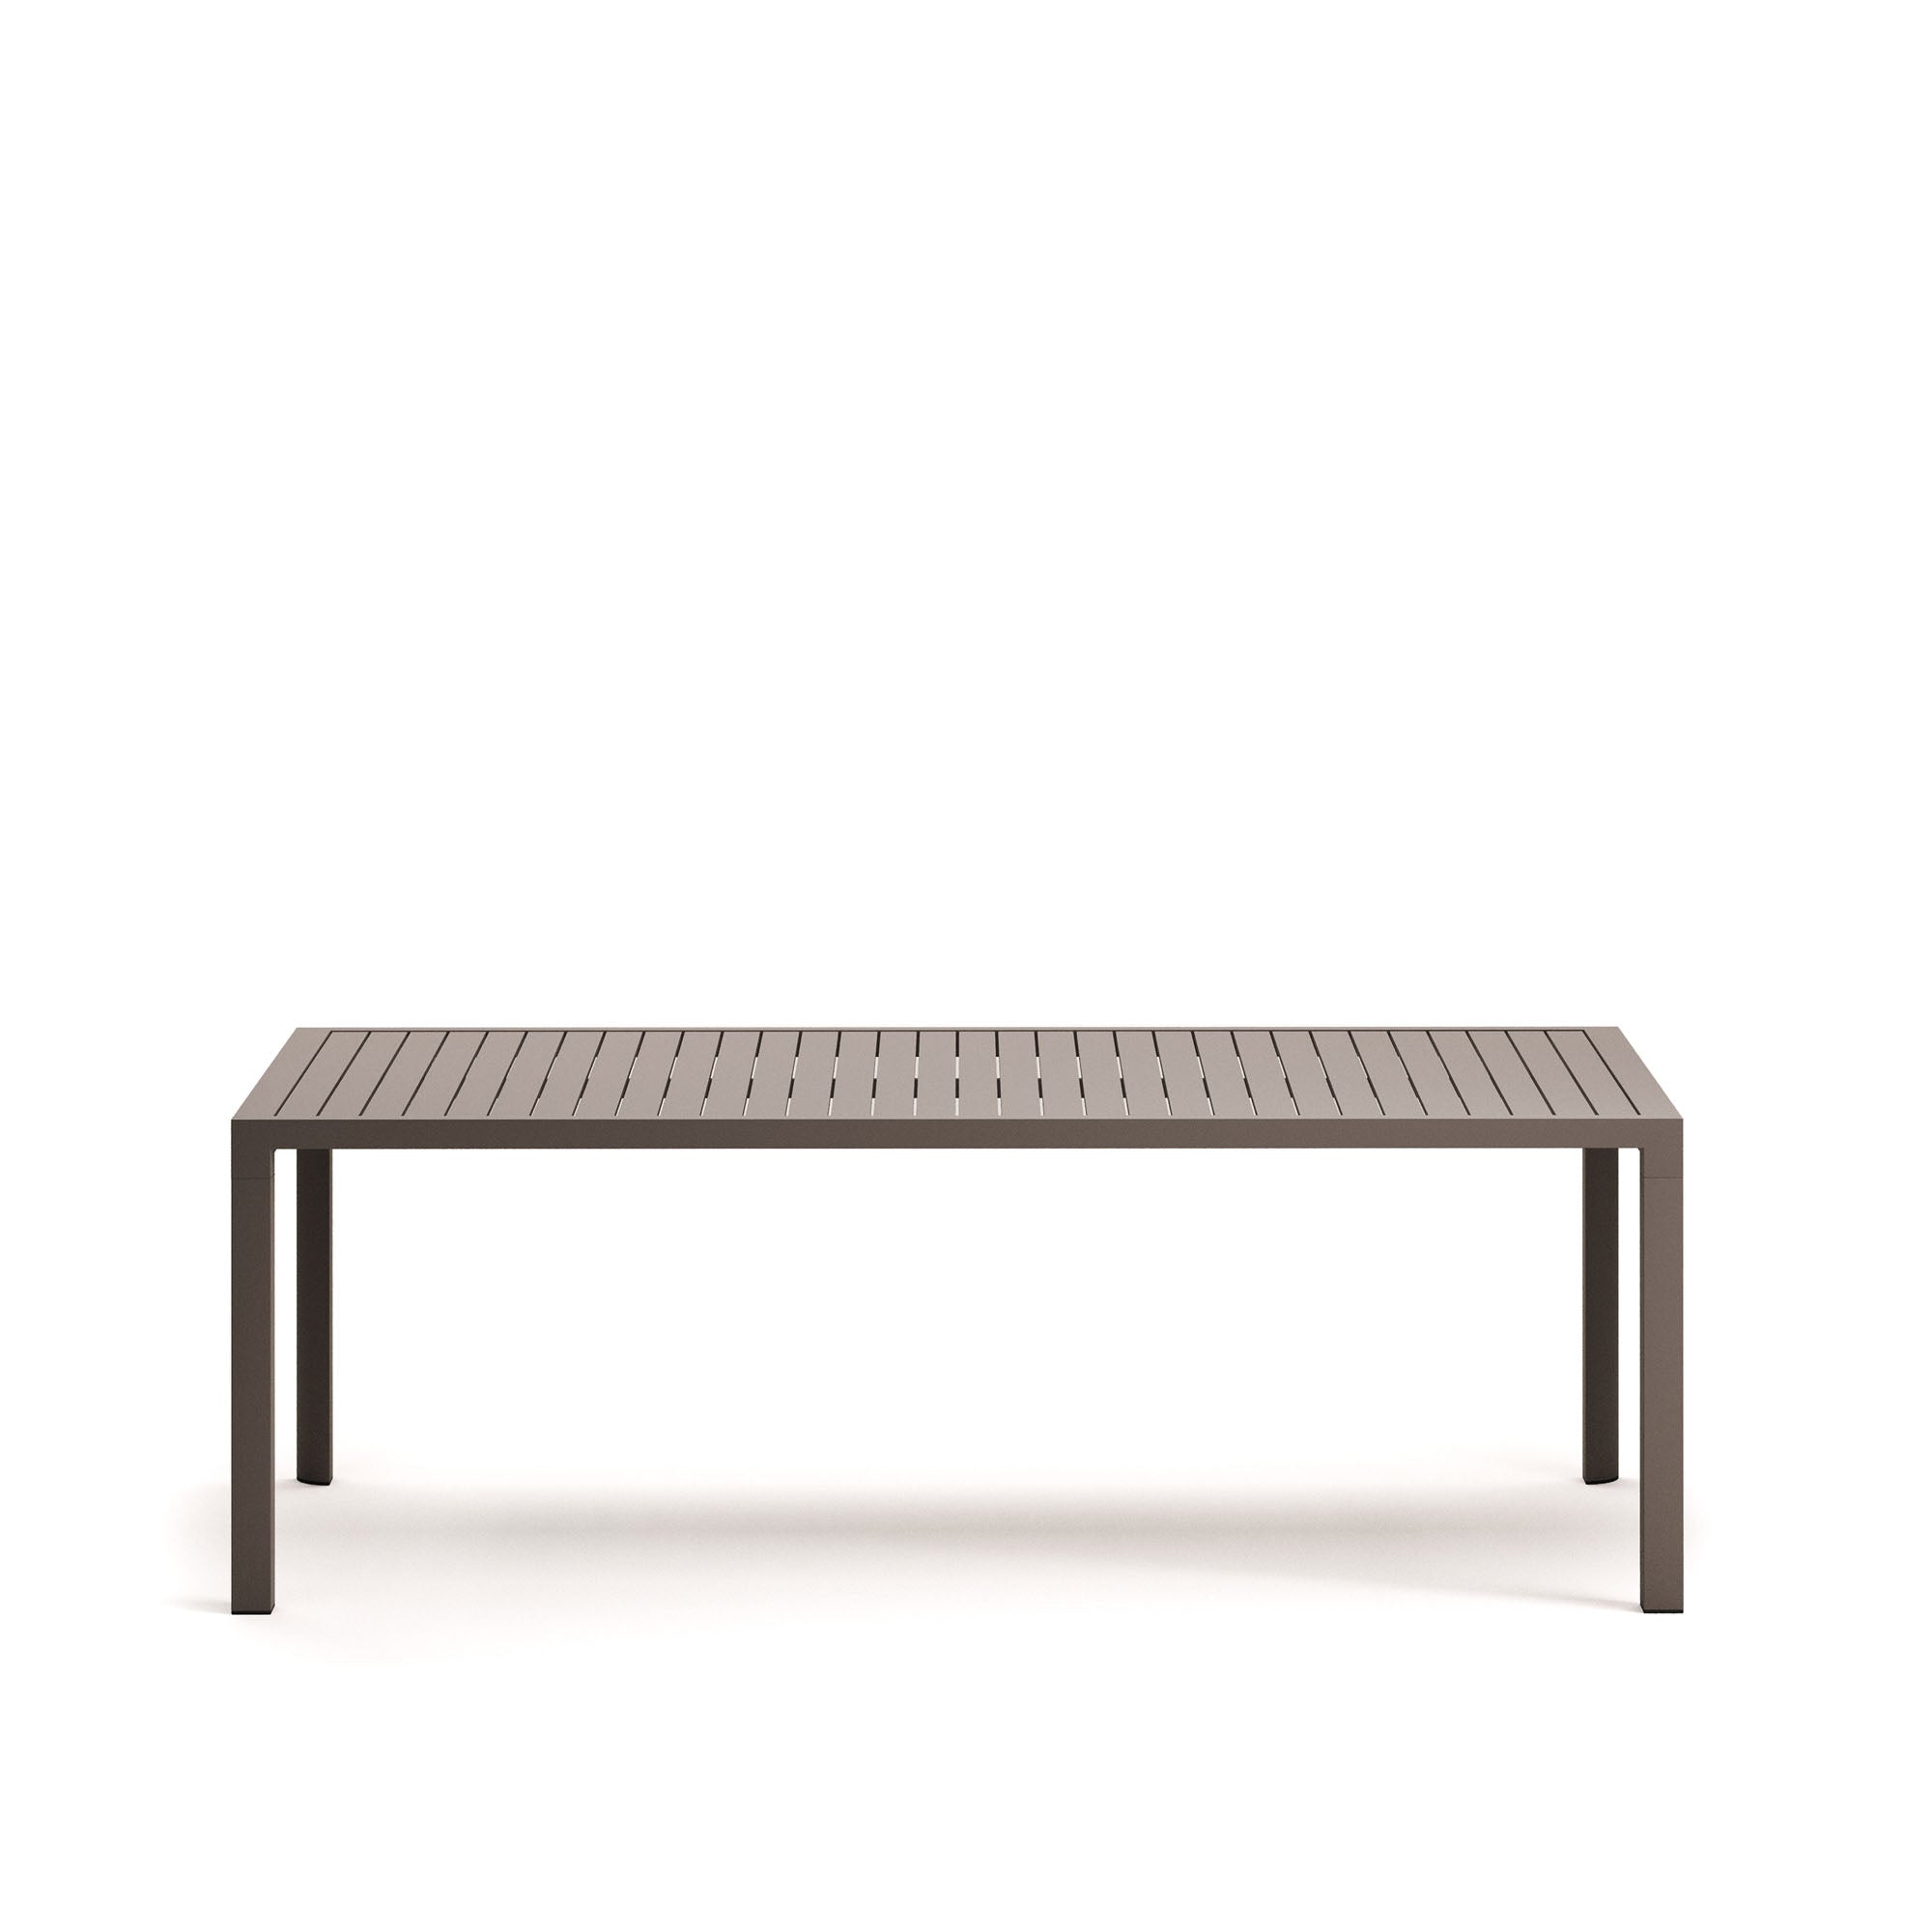 Culip aluminium outdoor table in powder coated brown finish, 220 x 100 cm